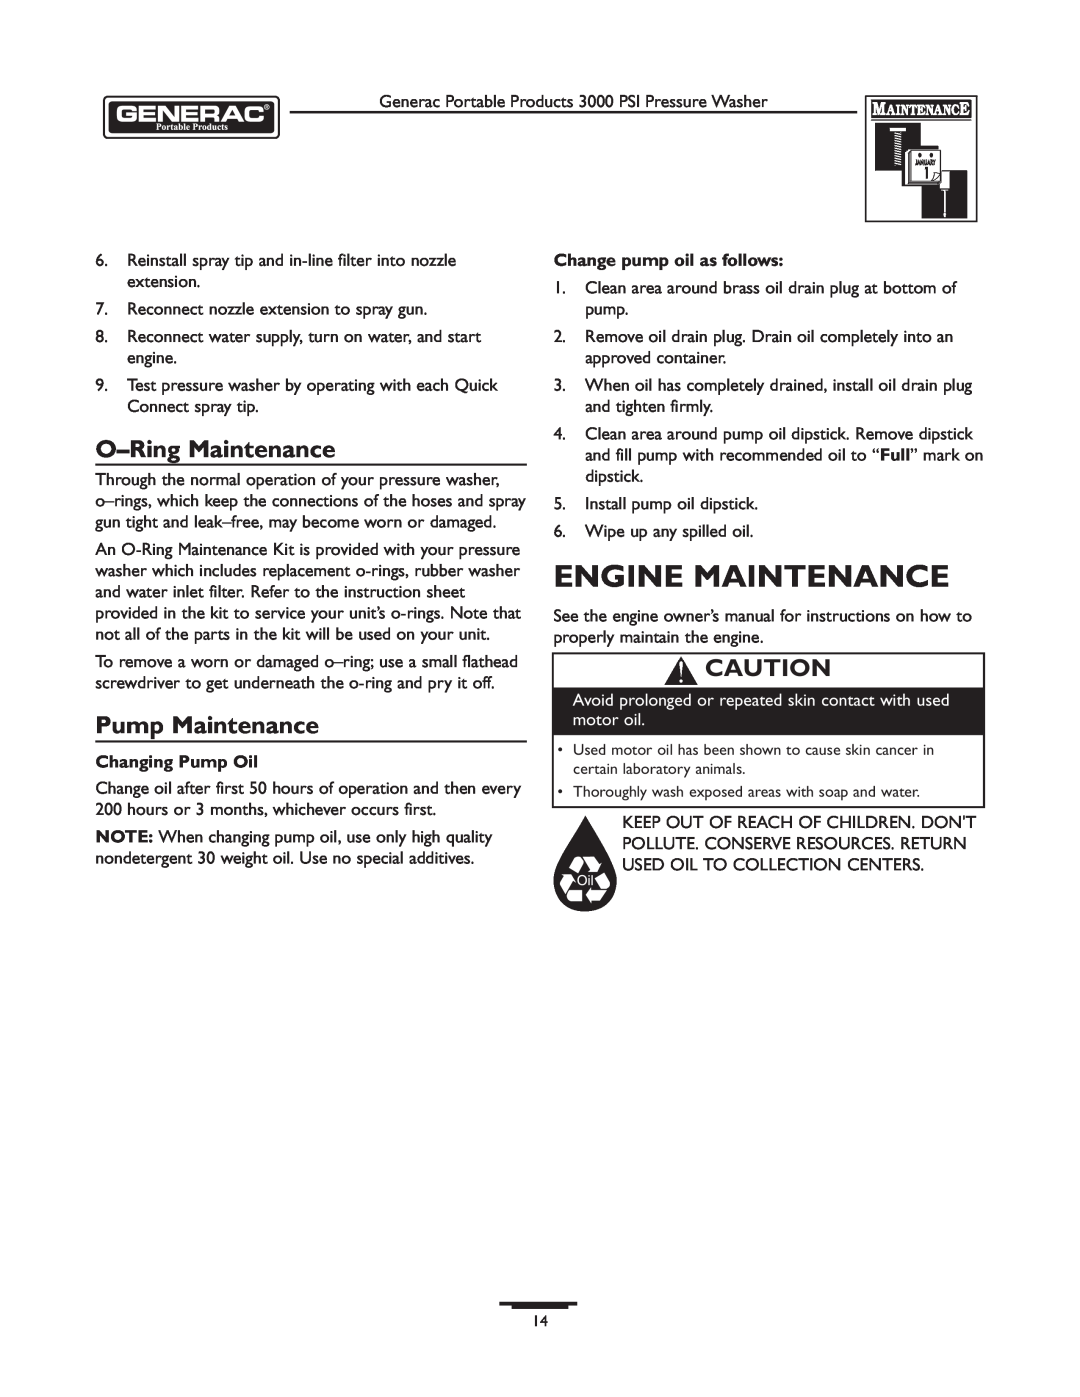 Briggs & Stratton 1418-2 owner manual Engine Maintenance, O-Ring Maintenance, Pump Maintenance, Changing Pump Oil 